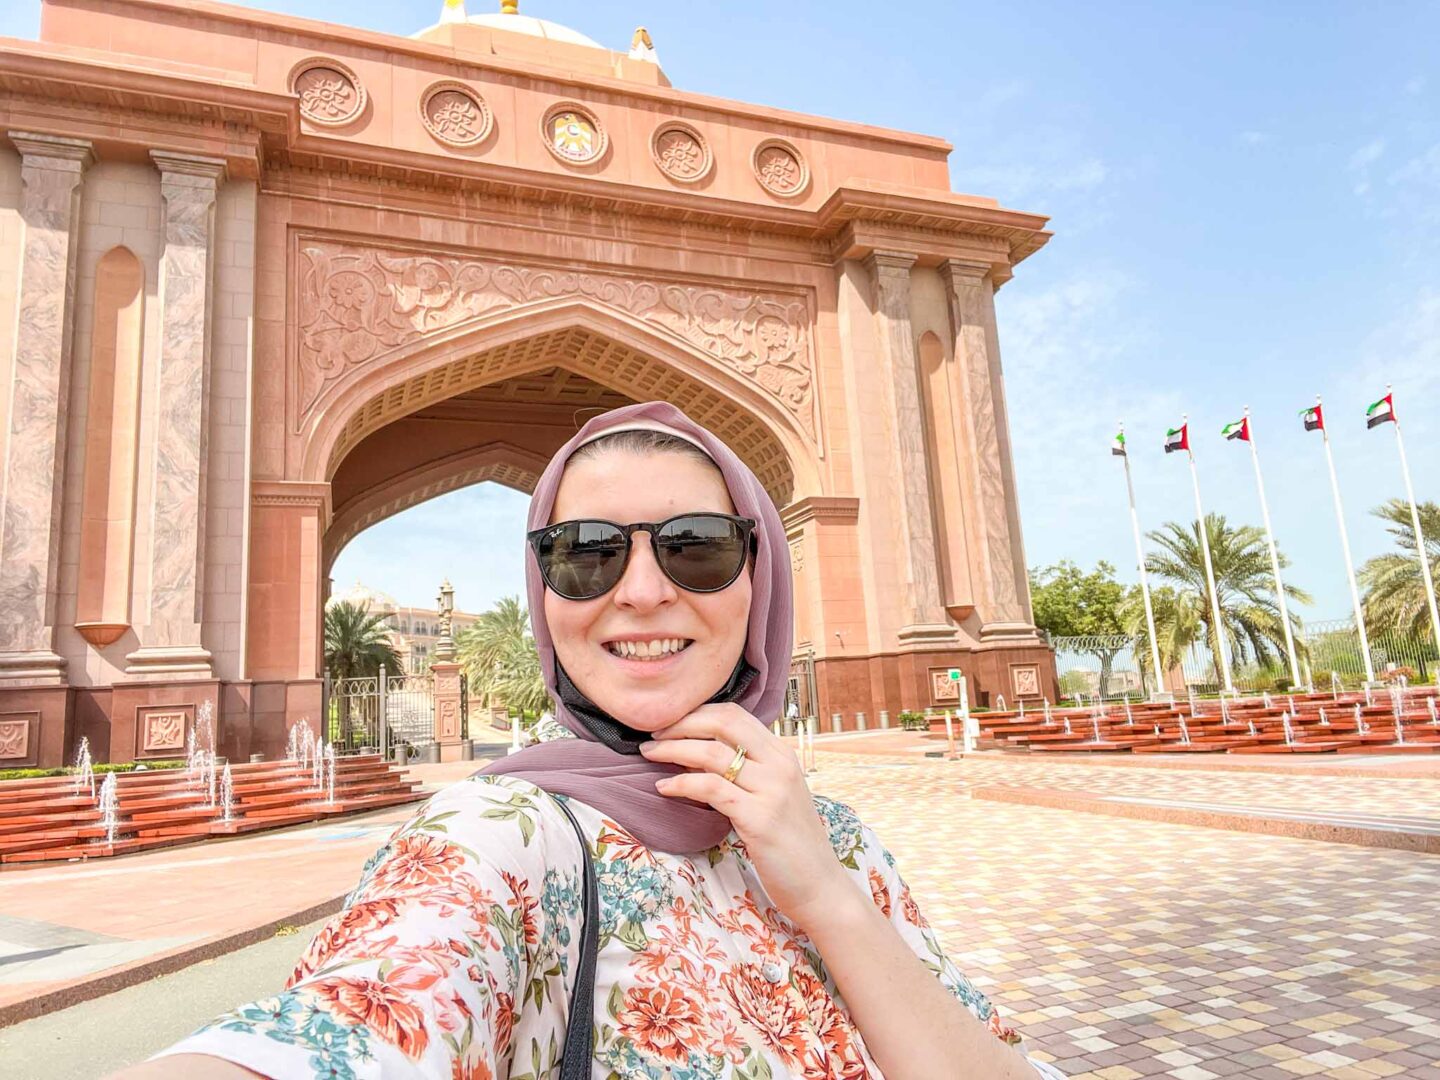 Places to visit in Abu Dhabi, emirates palace gate